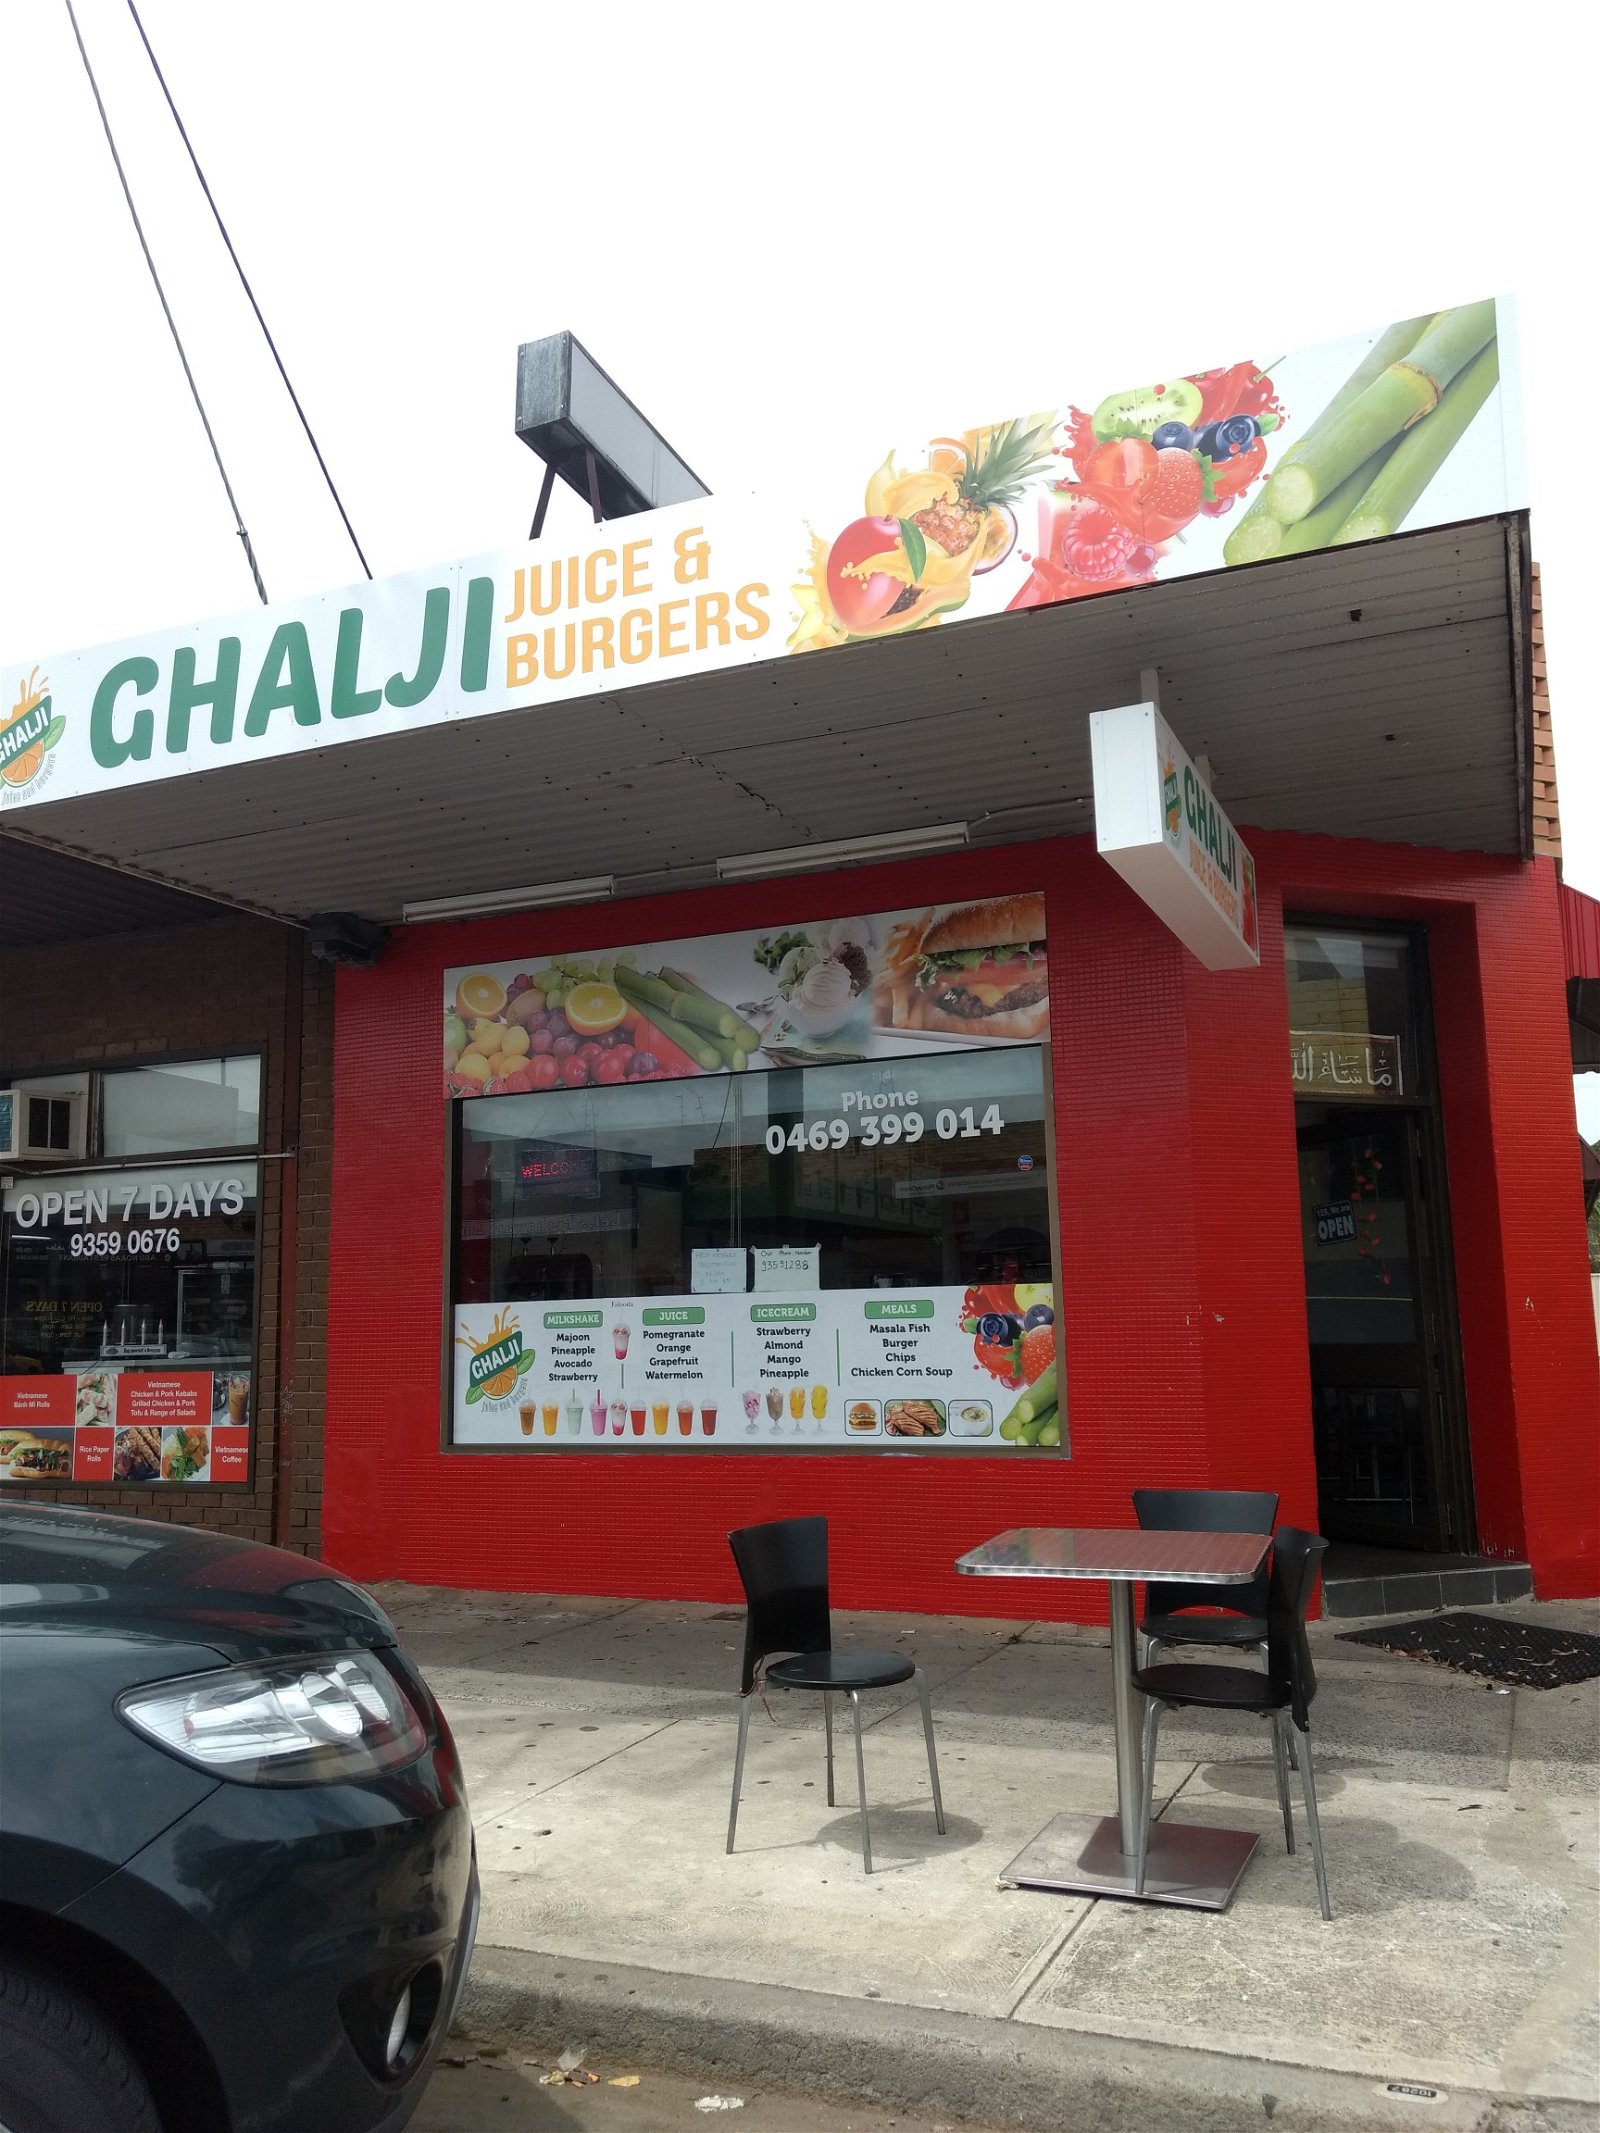 Ghalji Juice  Burgers - Tourism Gold Coast